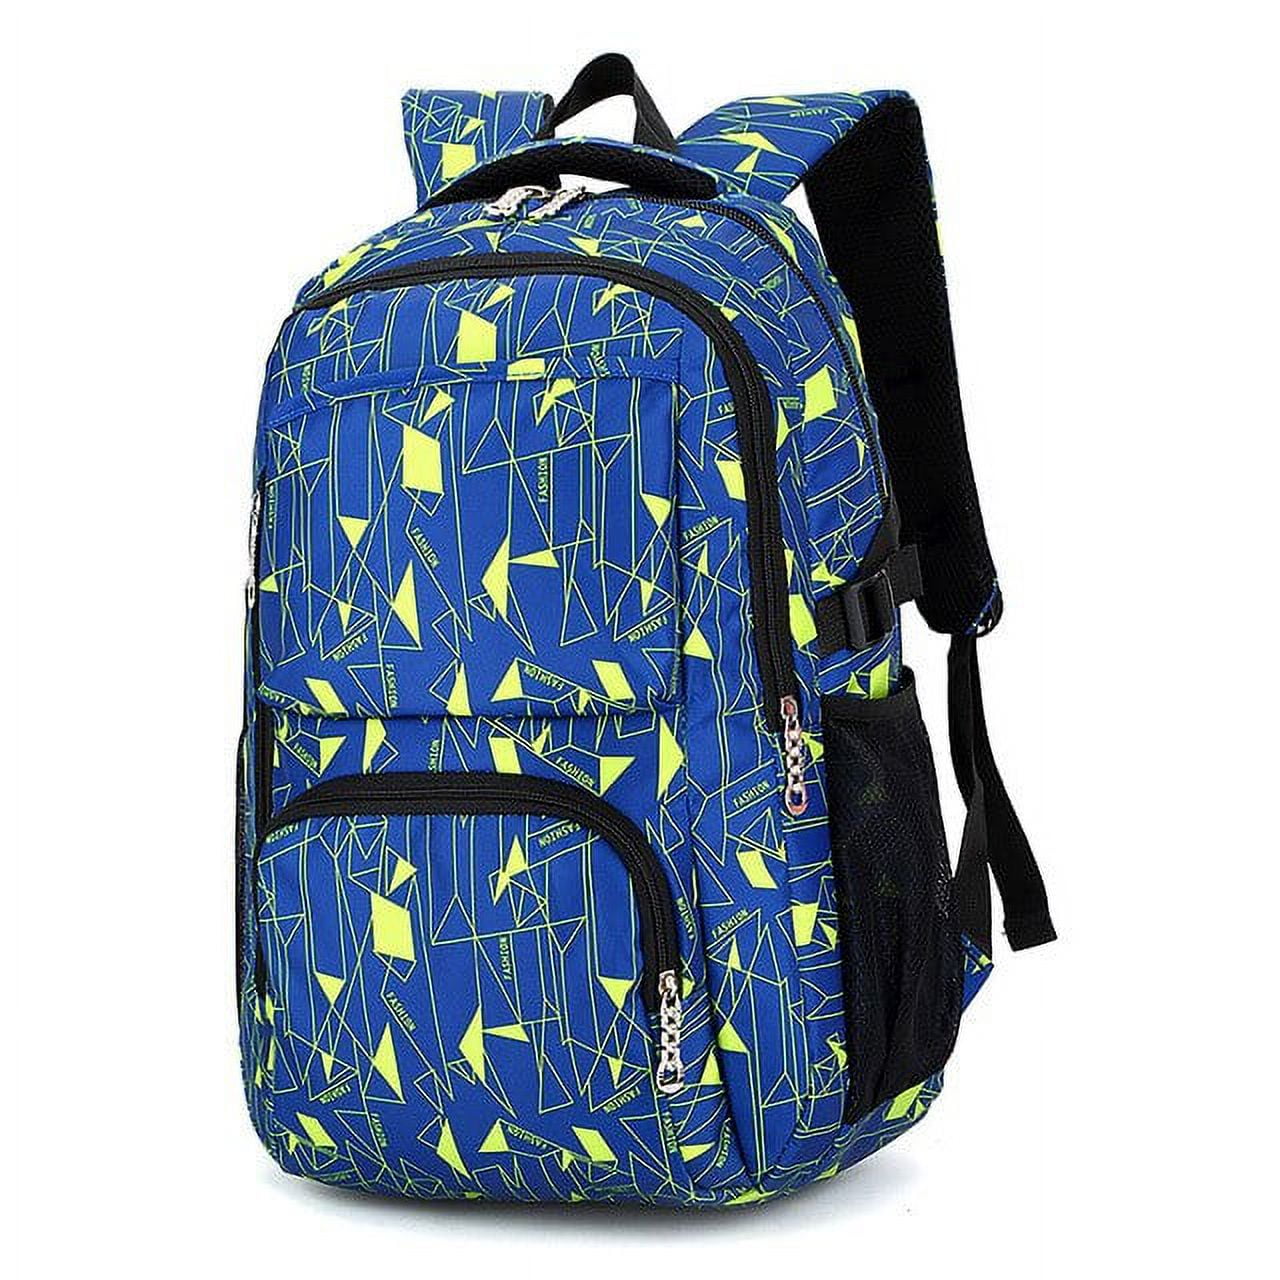 Fashion School Backpack USB Charge School Bags For Girls Women Backpack  Schoolbag Satchel Backpack Child Kids School Bag Mochila